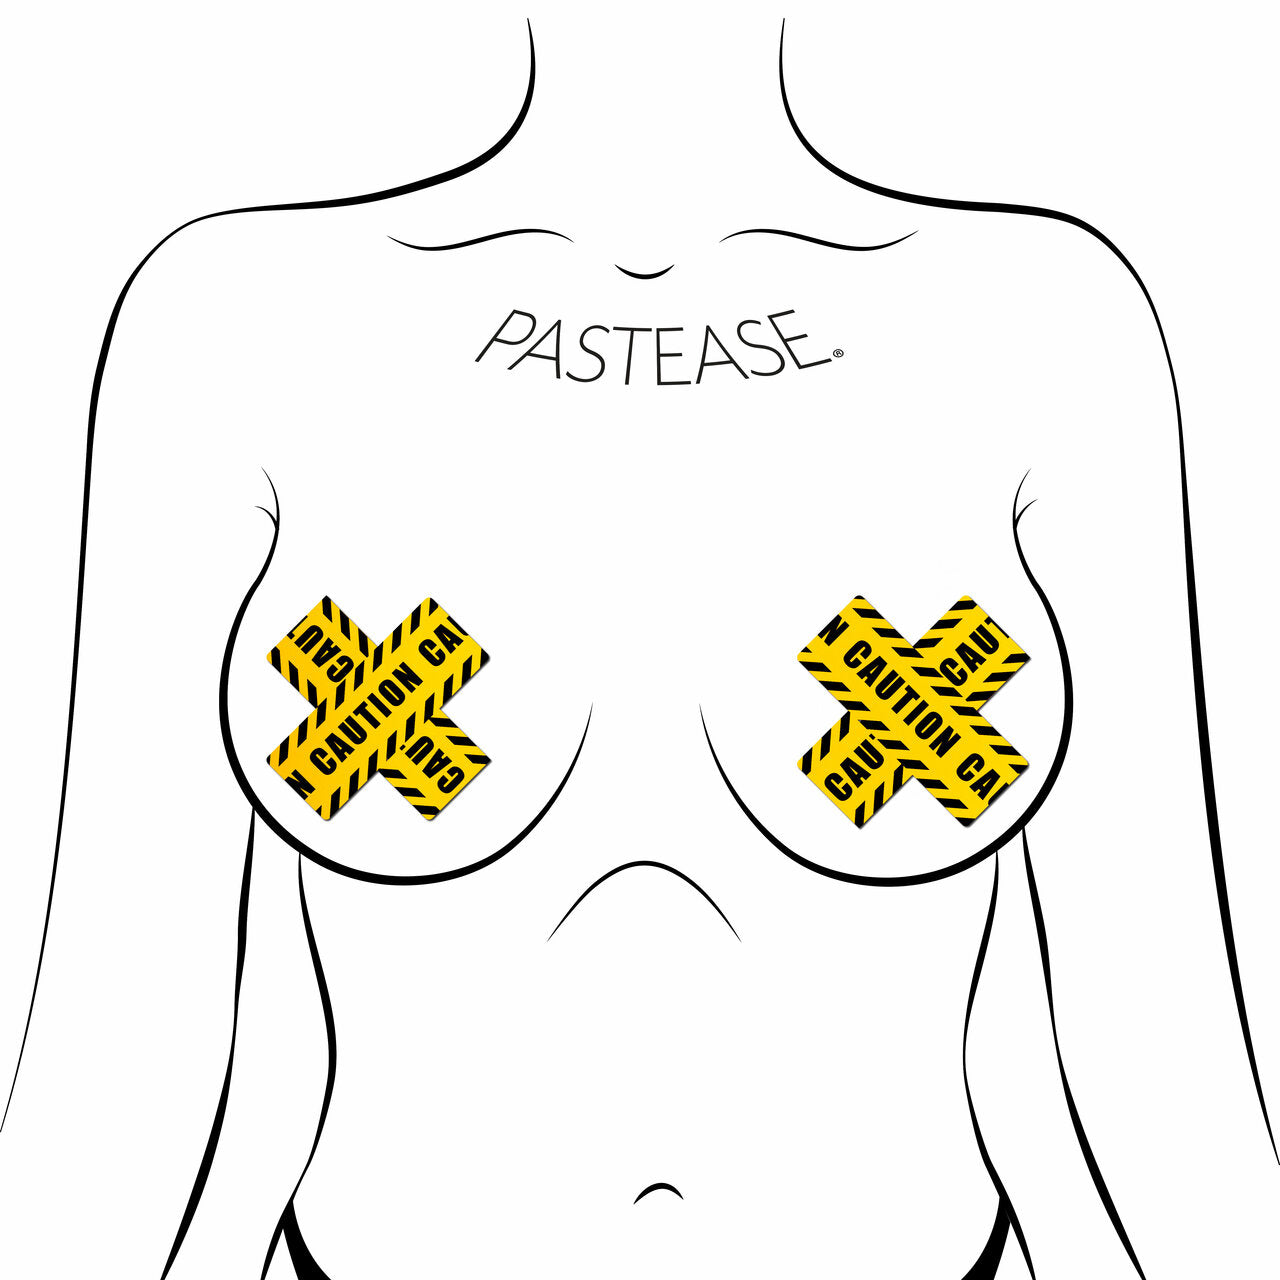 Plus X: Crossed Caution Tape Nipple Pasties